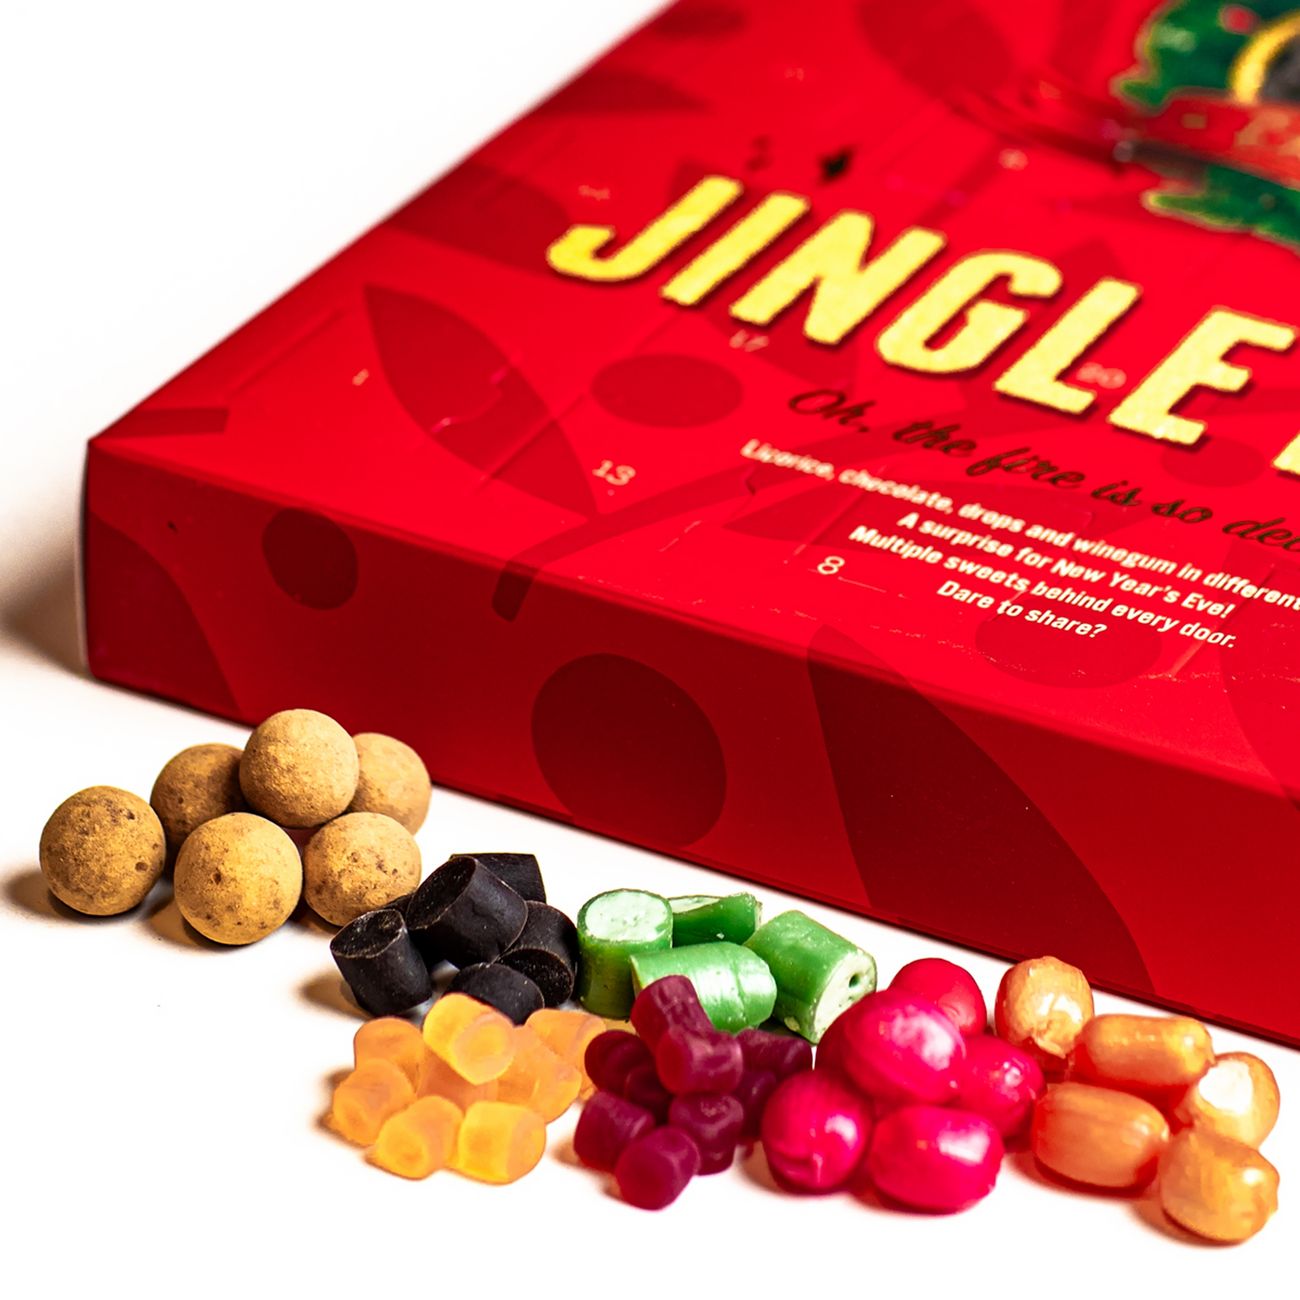 chili-klaus-jingle-balls-adventskalender-98644-3